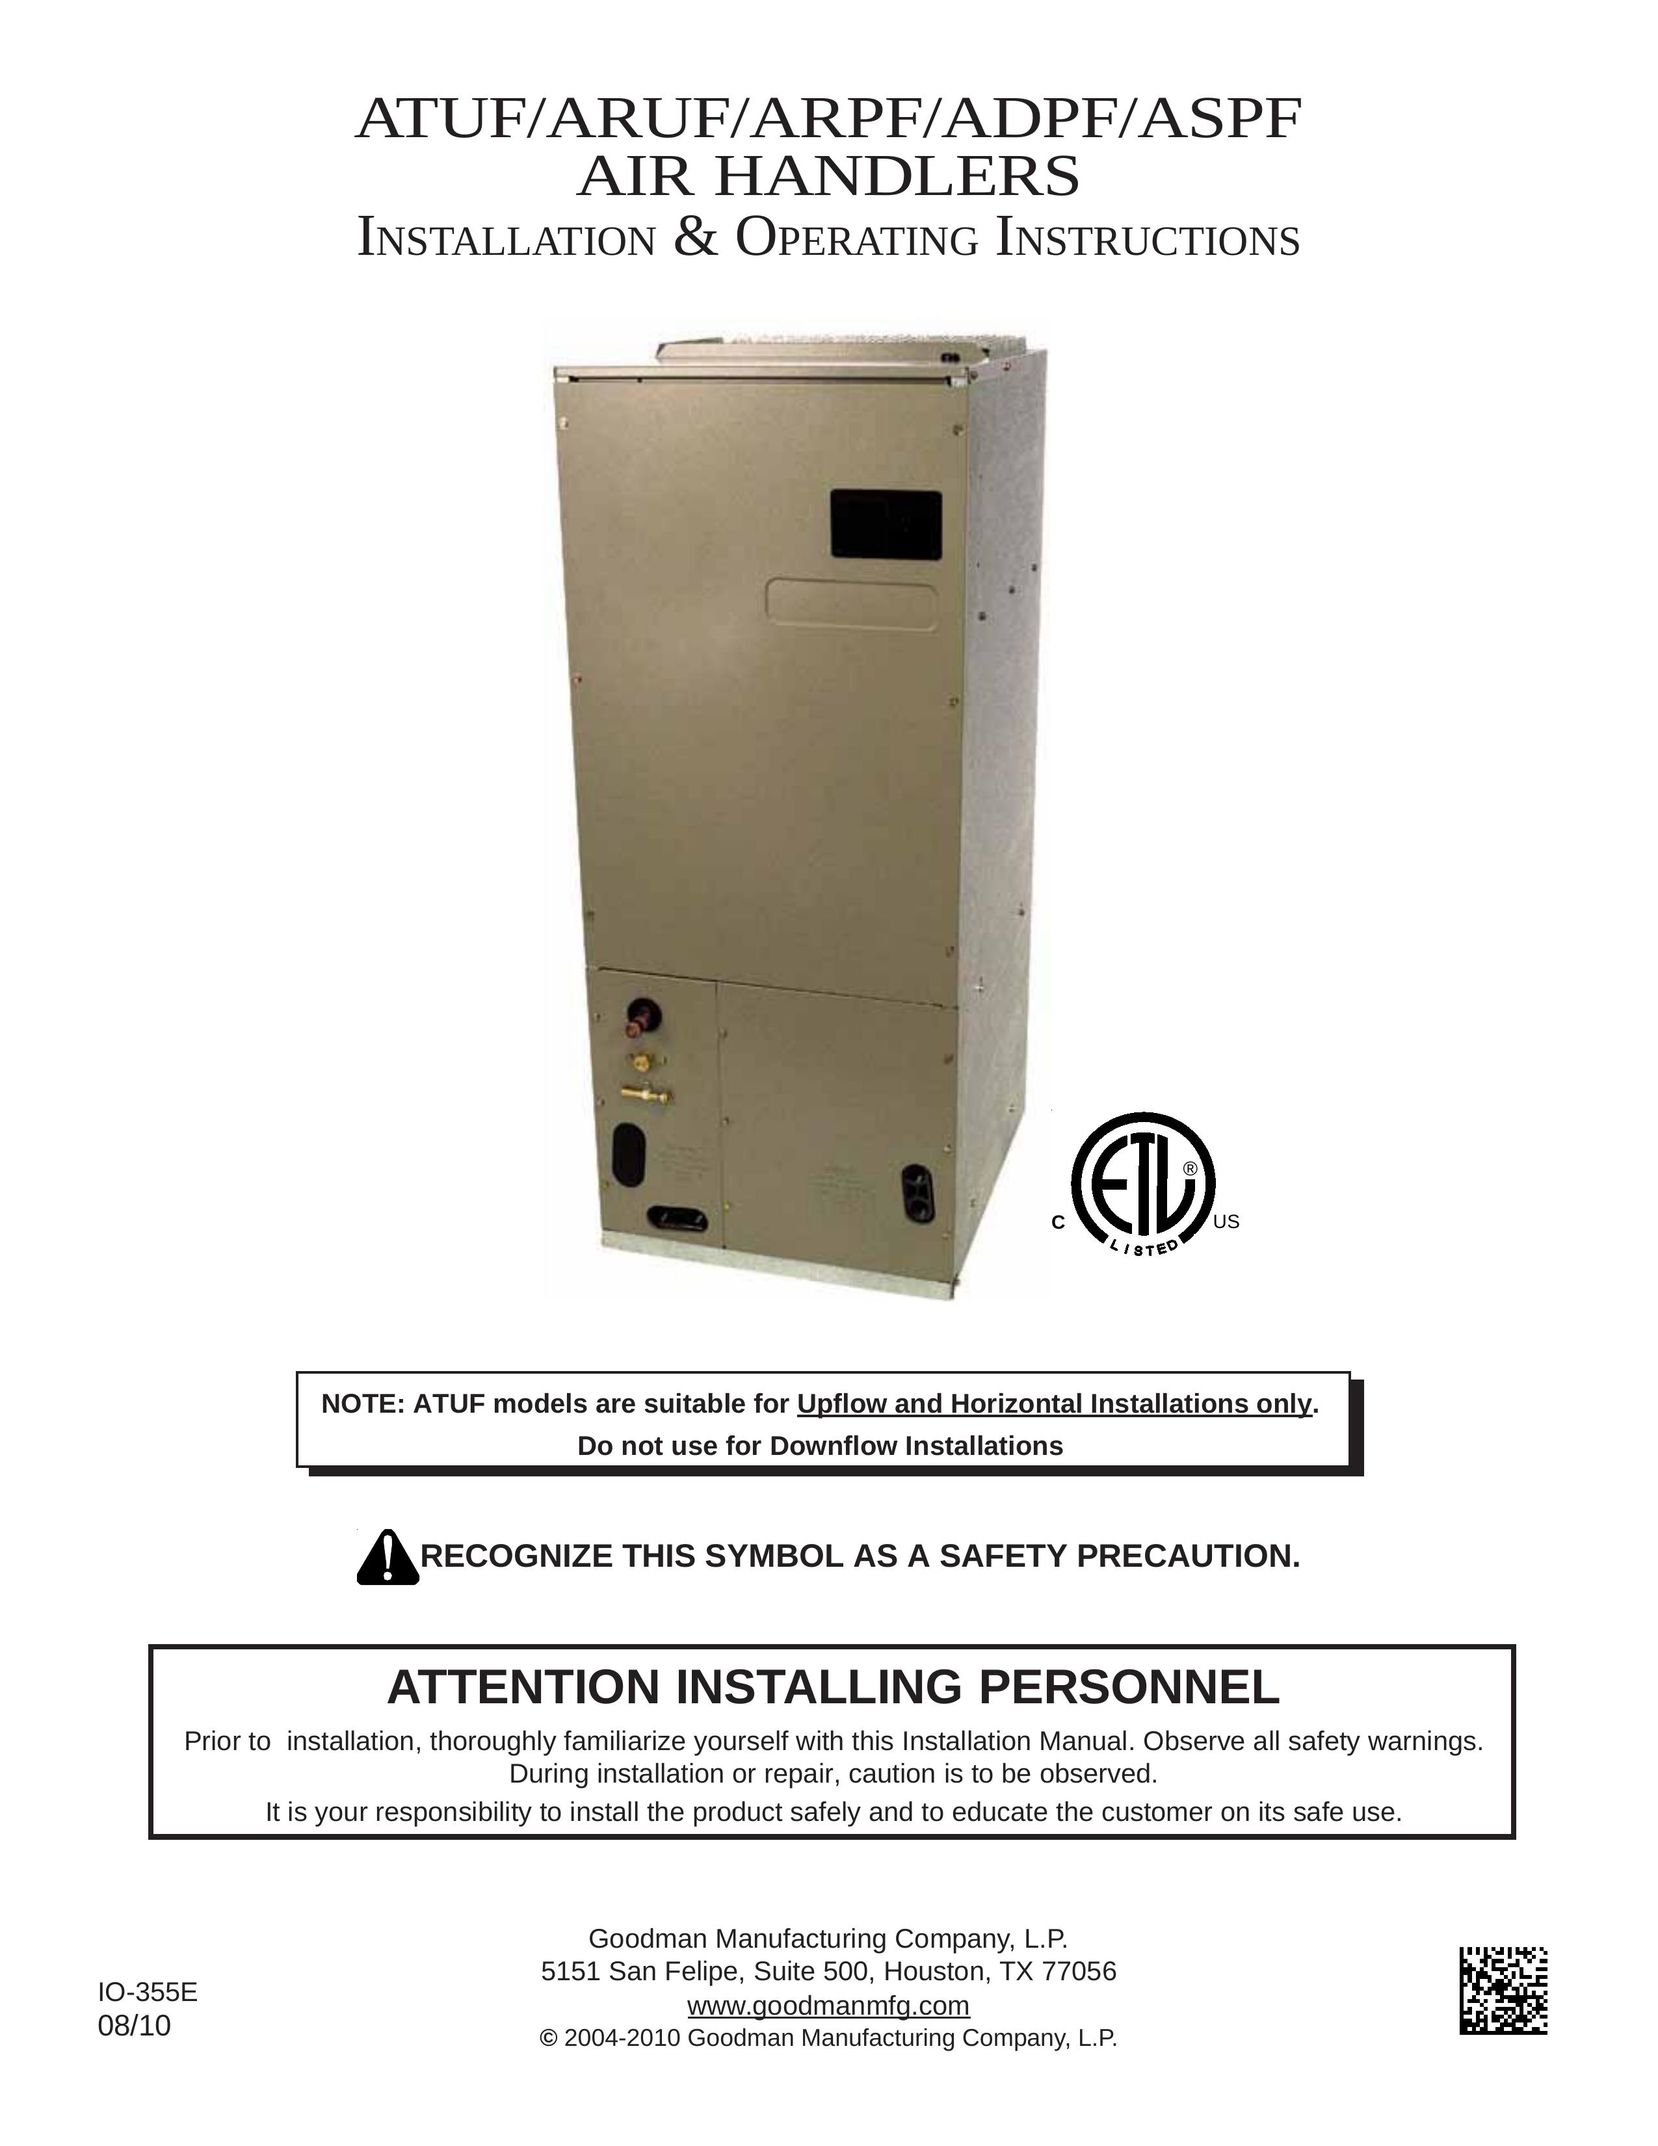 Goodman Mfg ATUF Air Conditioner User Manual